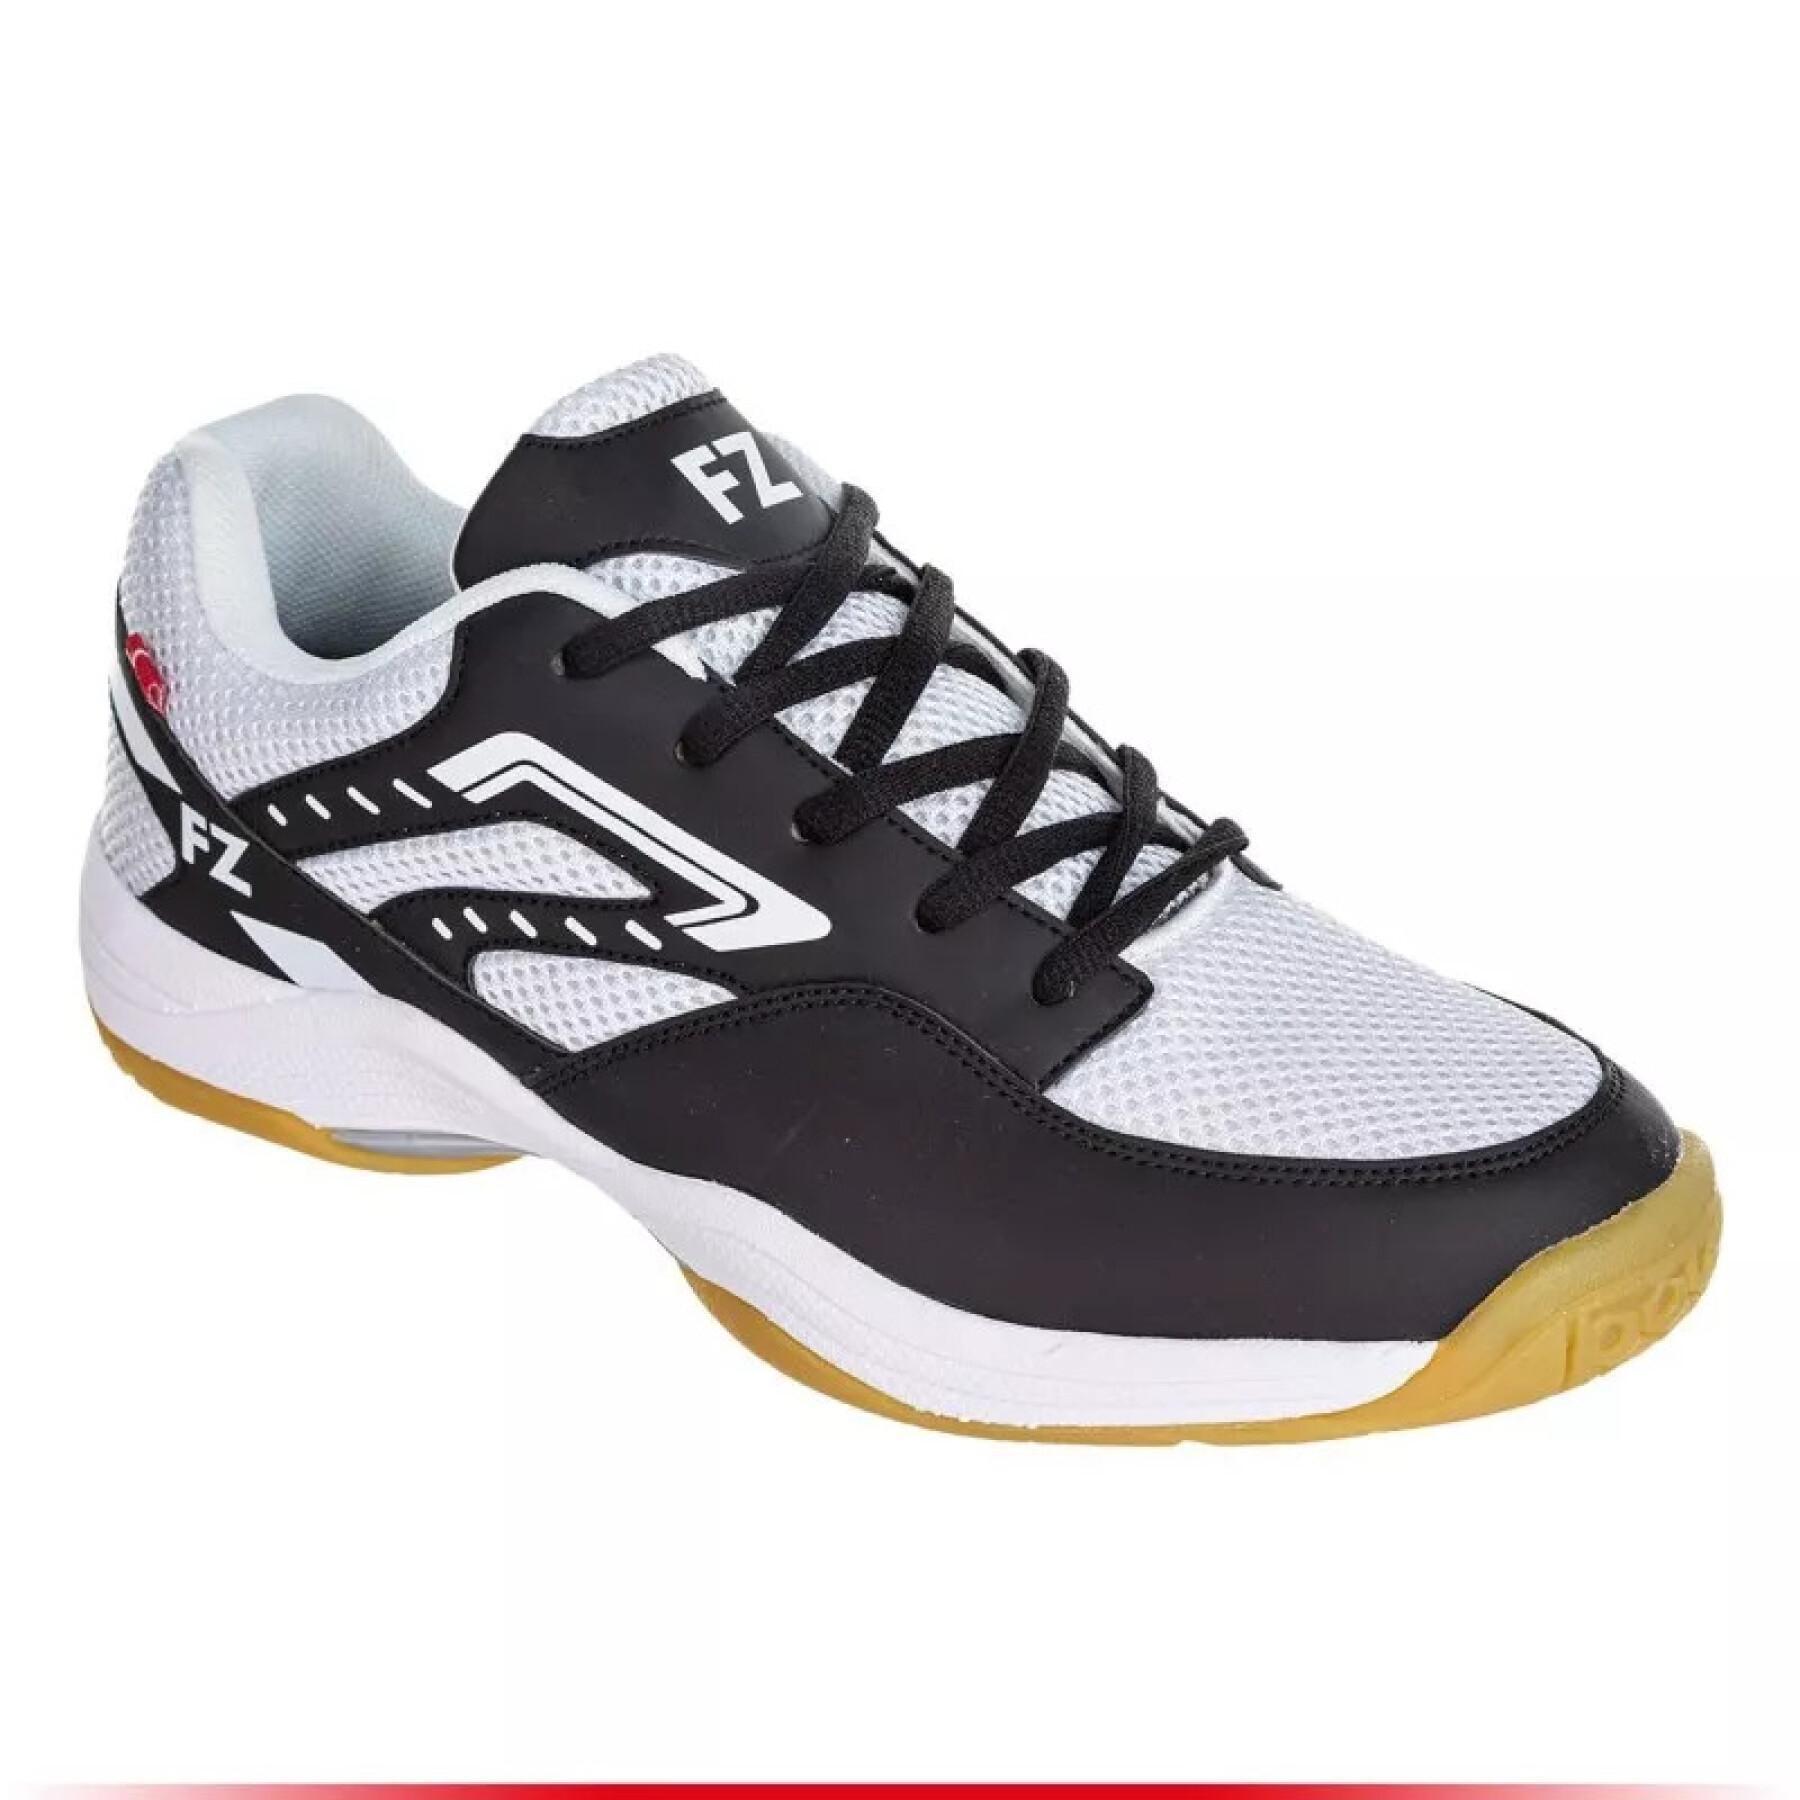 Chaussures de badminton FZ Forza X-pulse